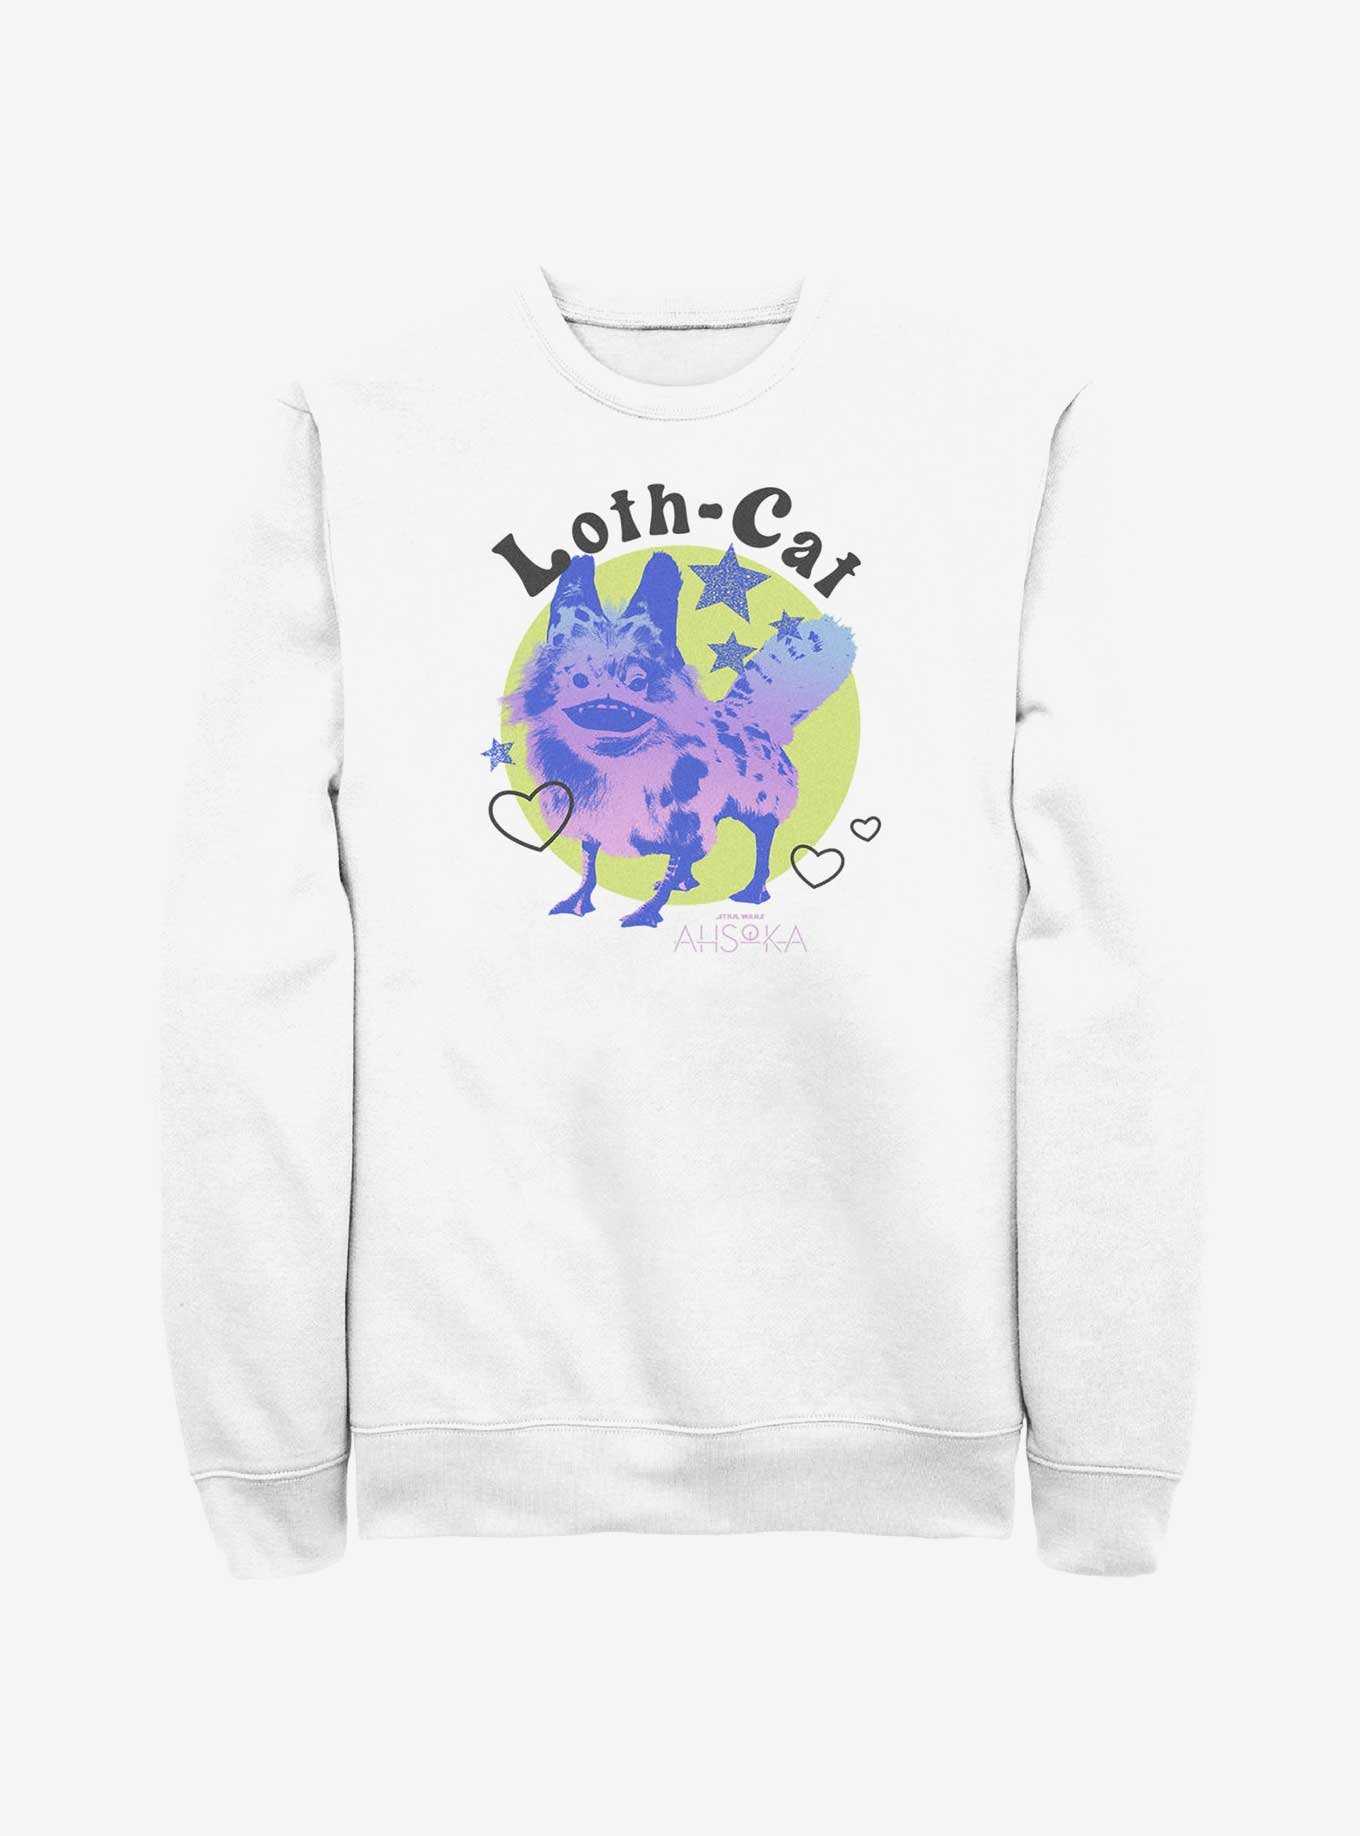 Star Wars Ahsoka Loth-Cat Cuteness Sweatshirt, , hi-res